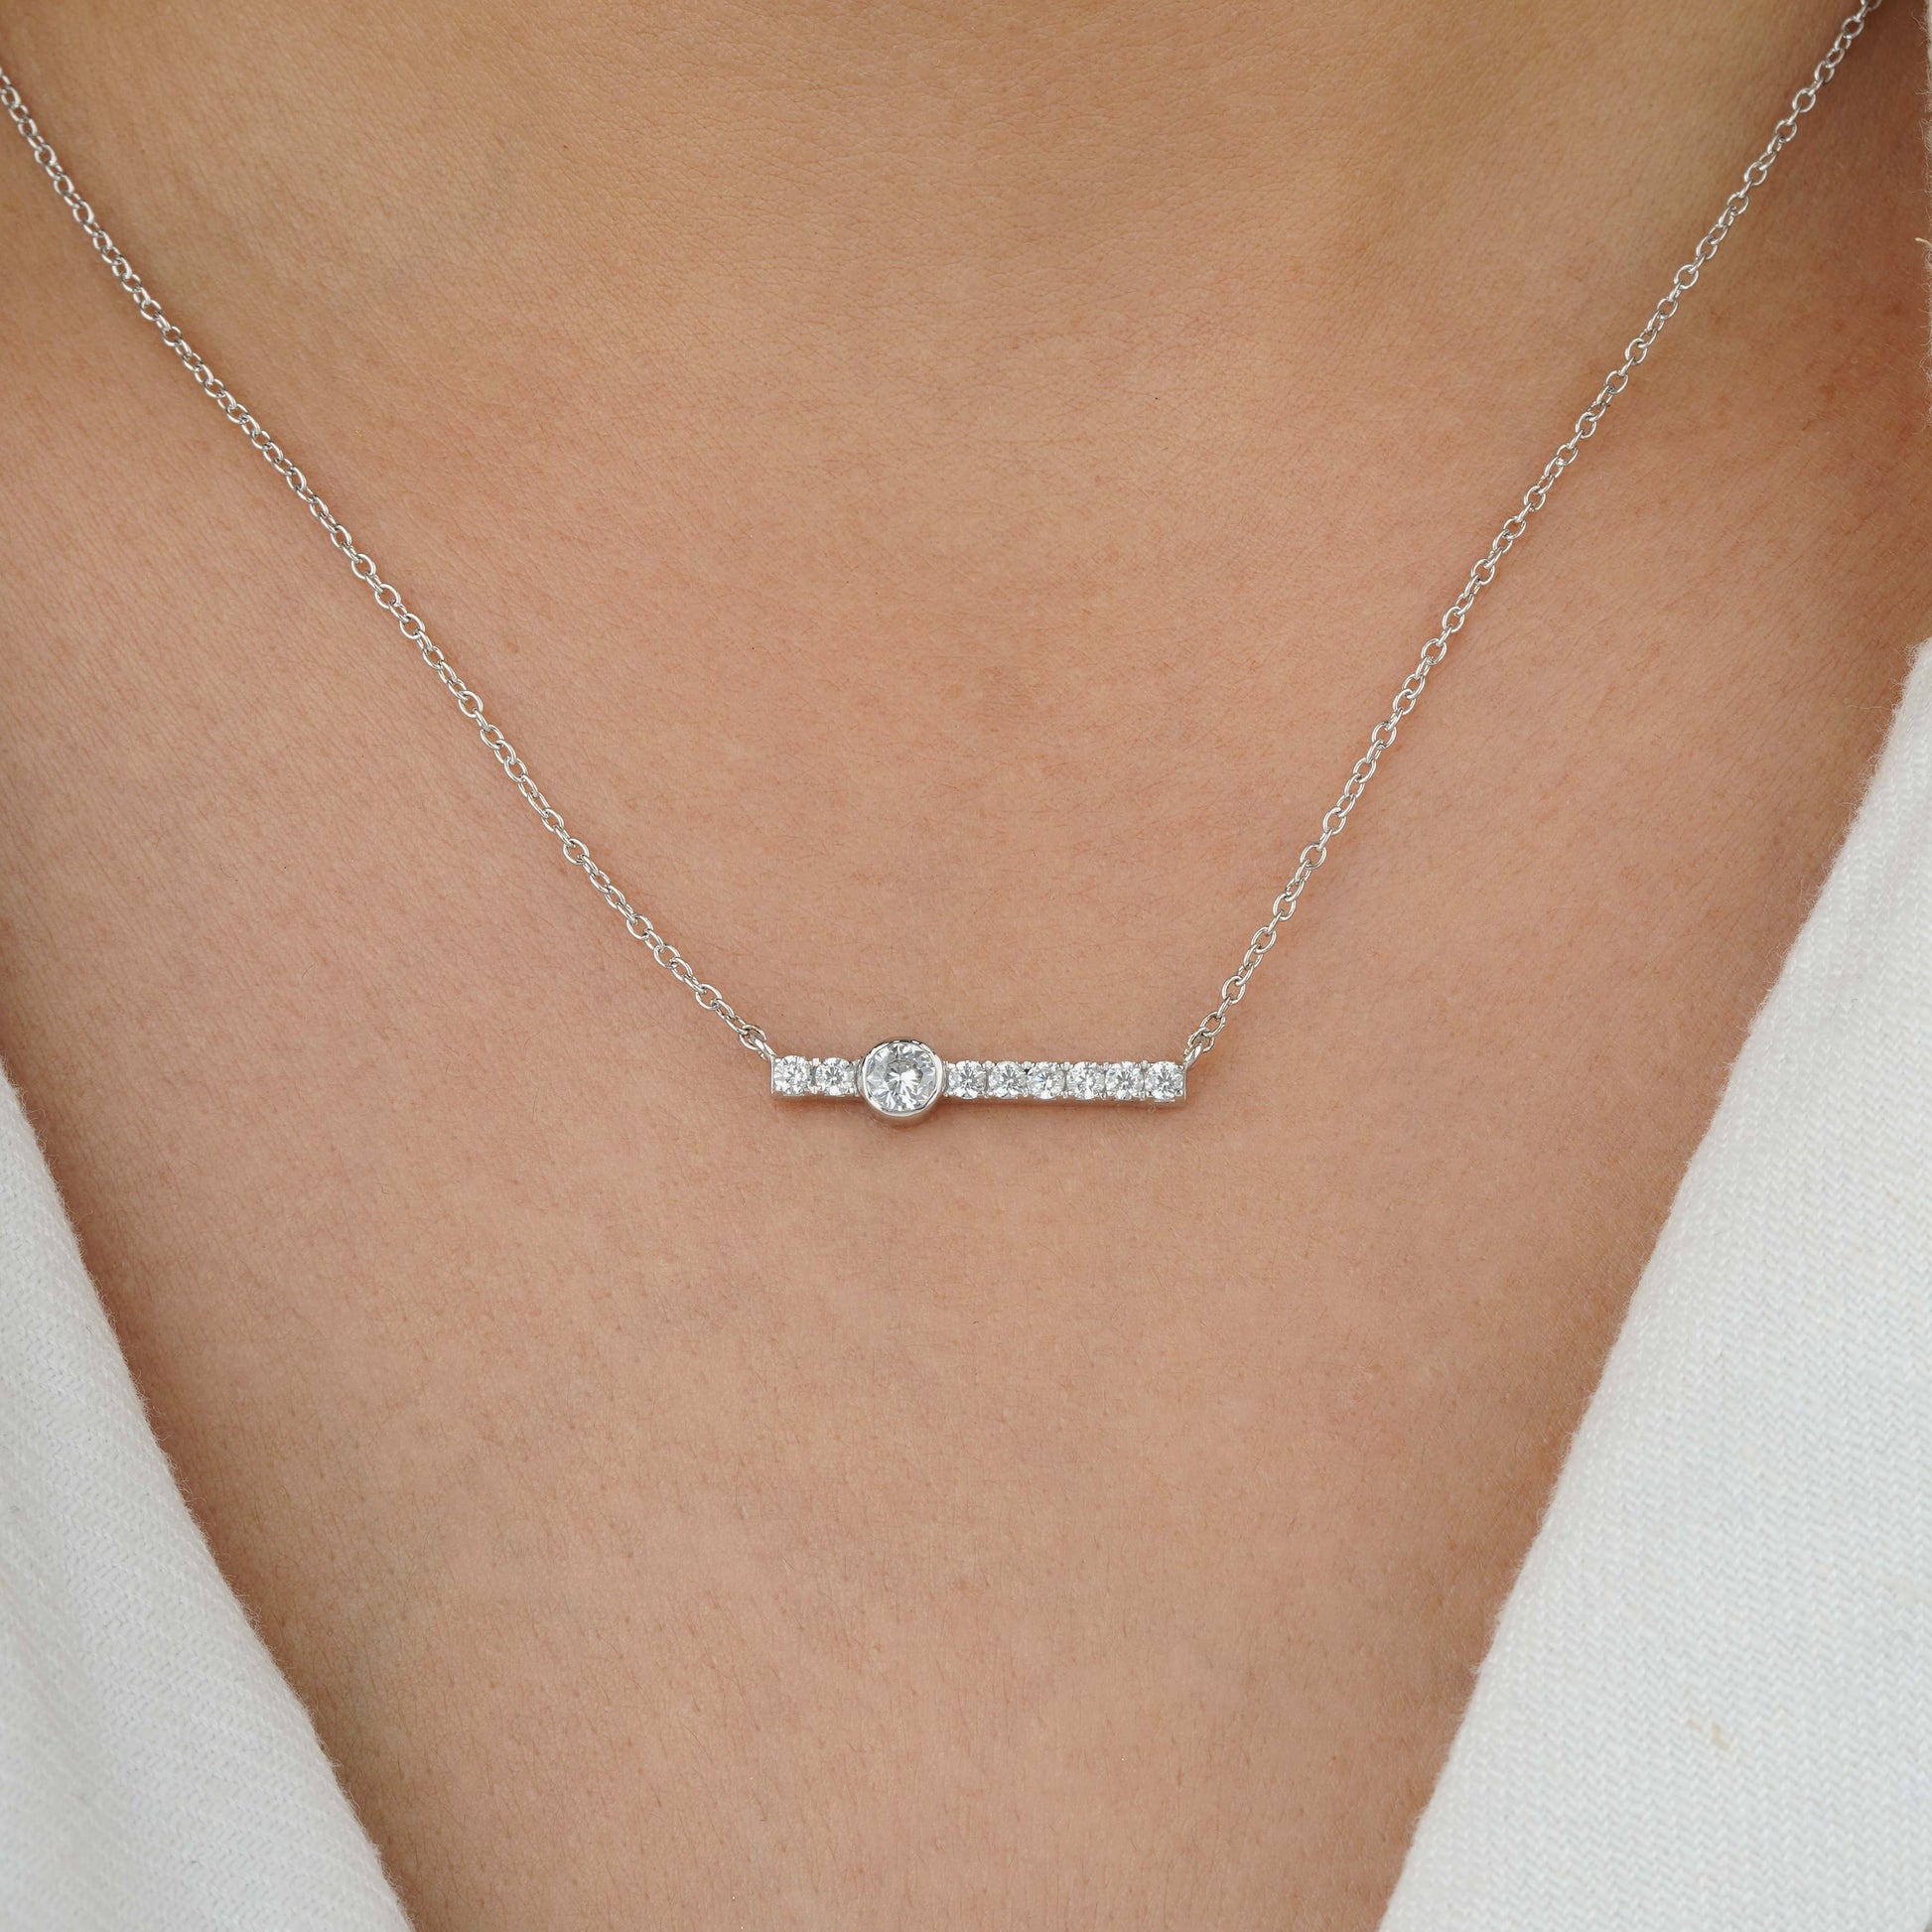 Horizontal Diamond Bar Necklace in 14K White Gold